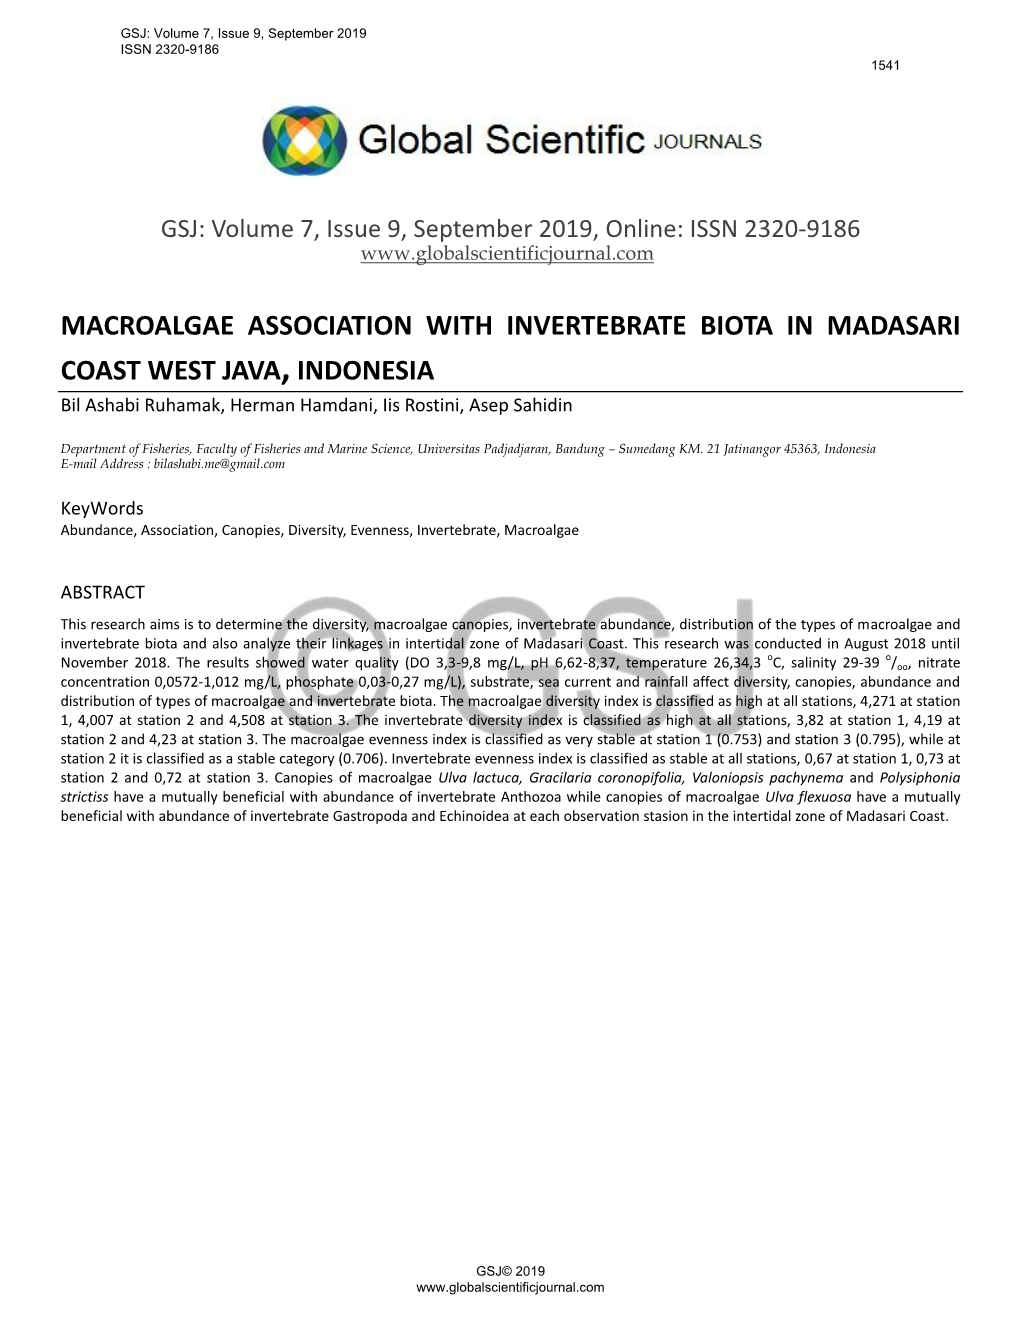 Macroalgae Association with Invertebrate Biota in Madasari Coast, West Java, Indonesia